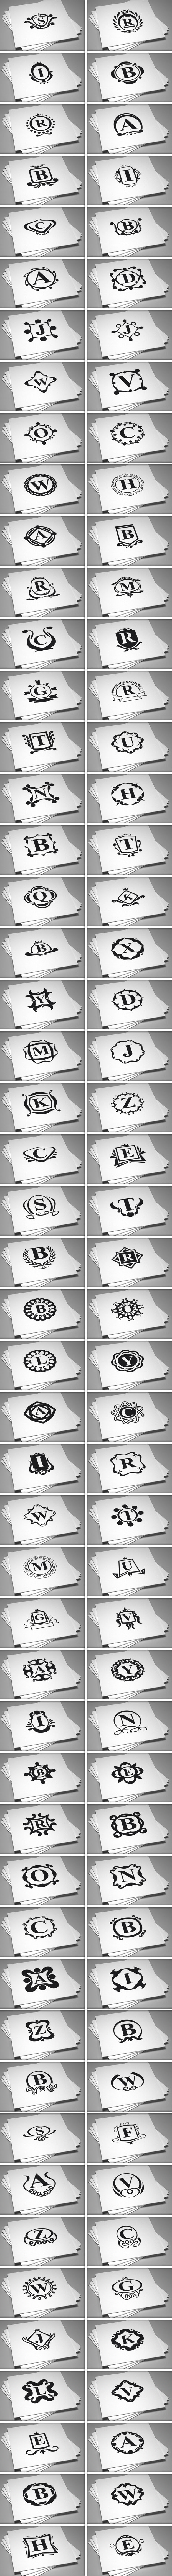 100 Vector Crests Logo Templates